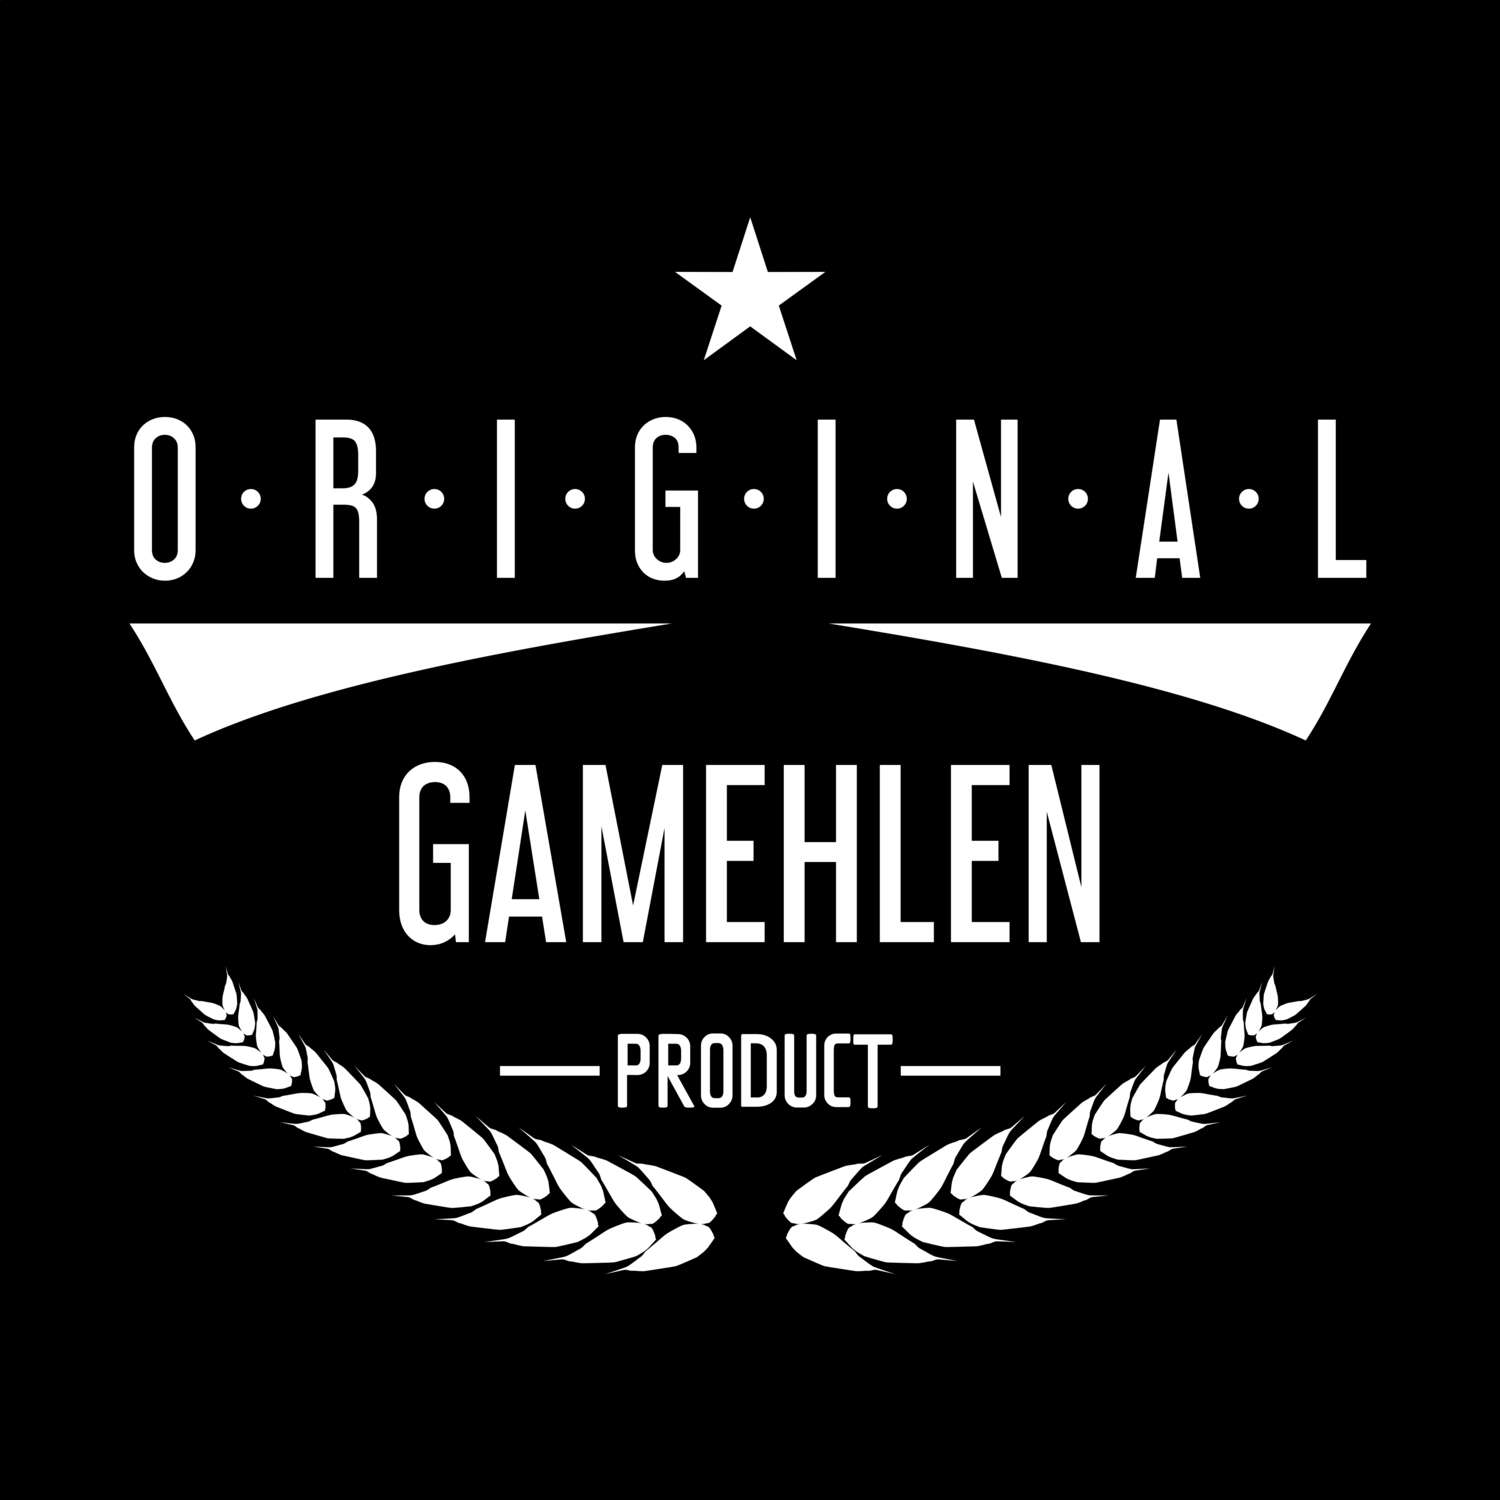 Gamehlen T-Shirt »Original Product«